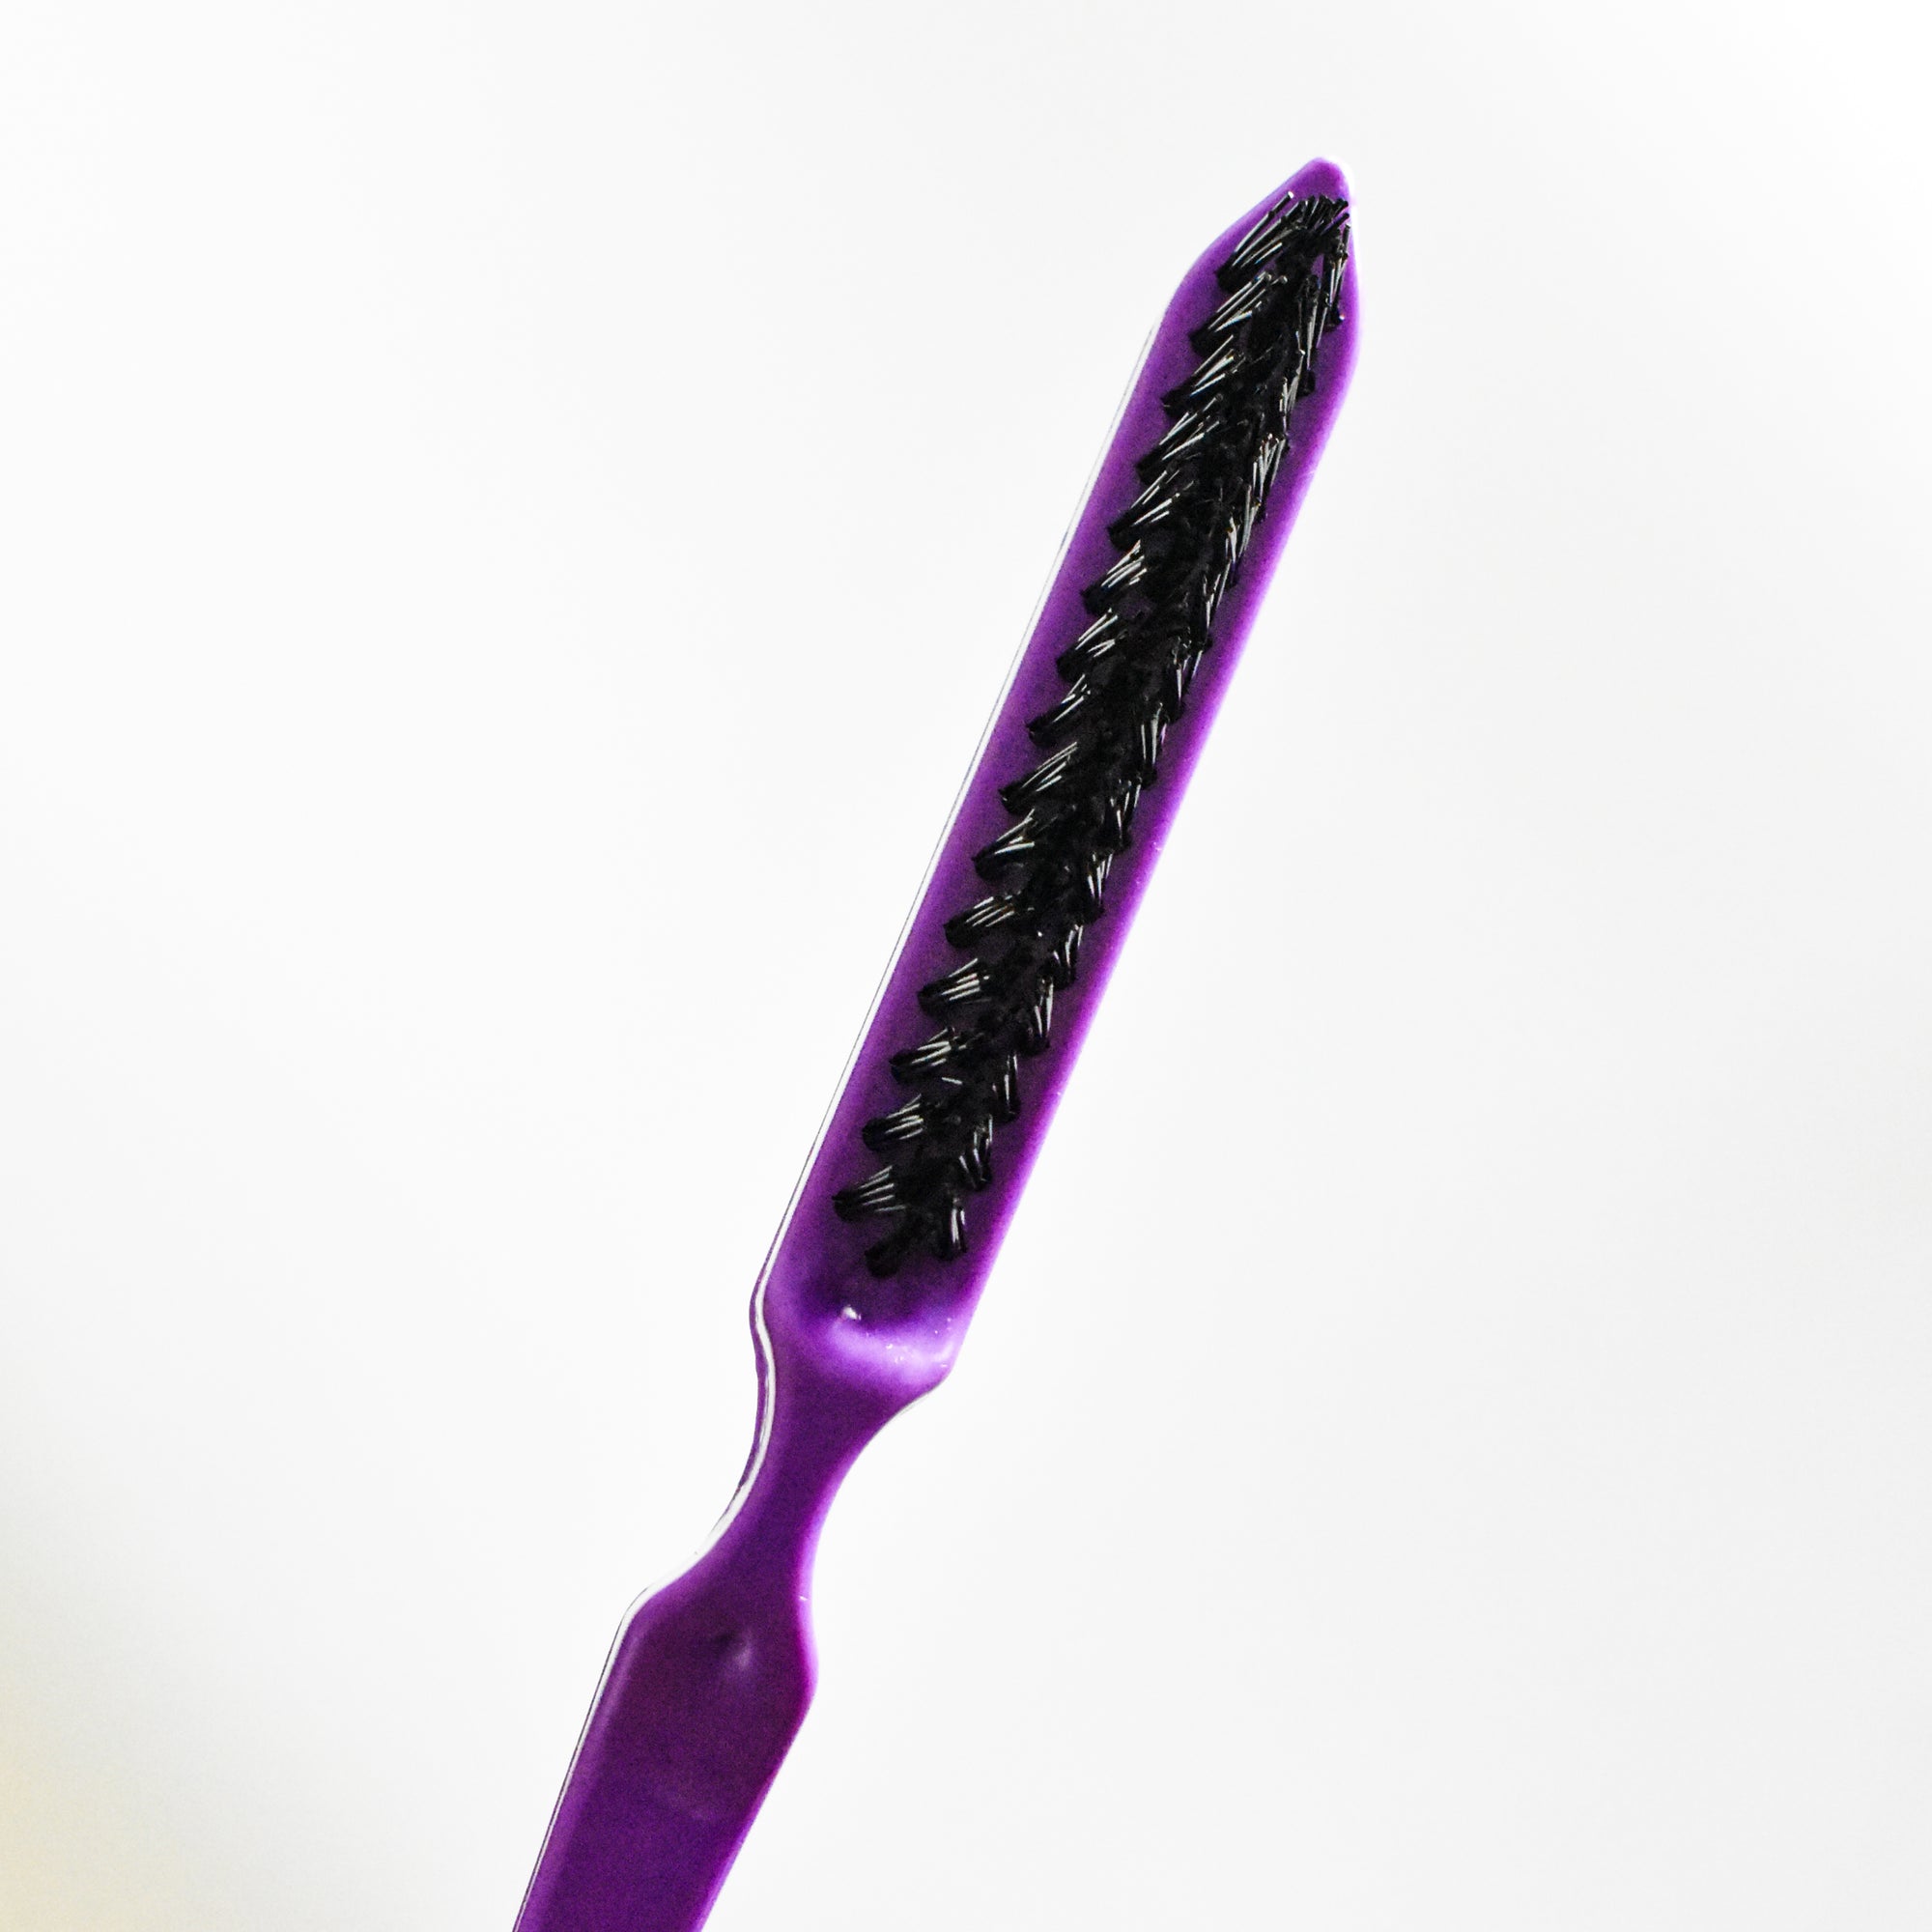 Slim Hairbrush | Firm Bristles